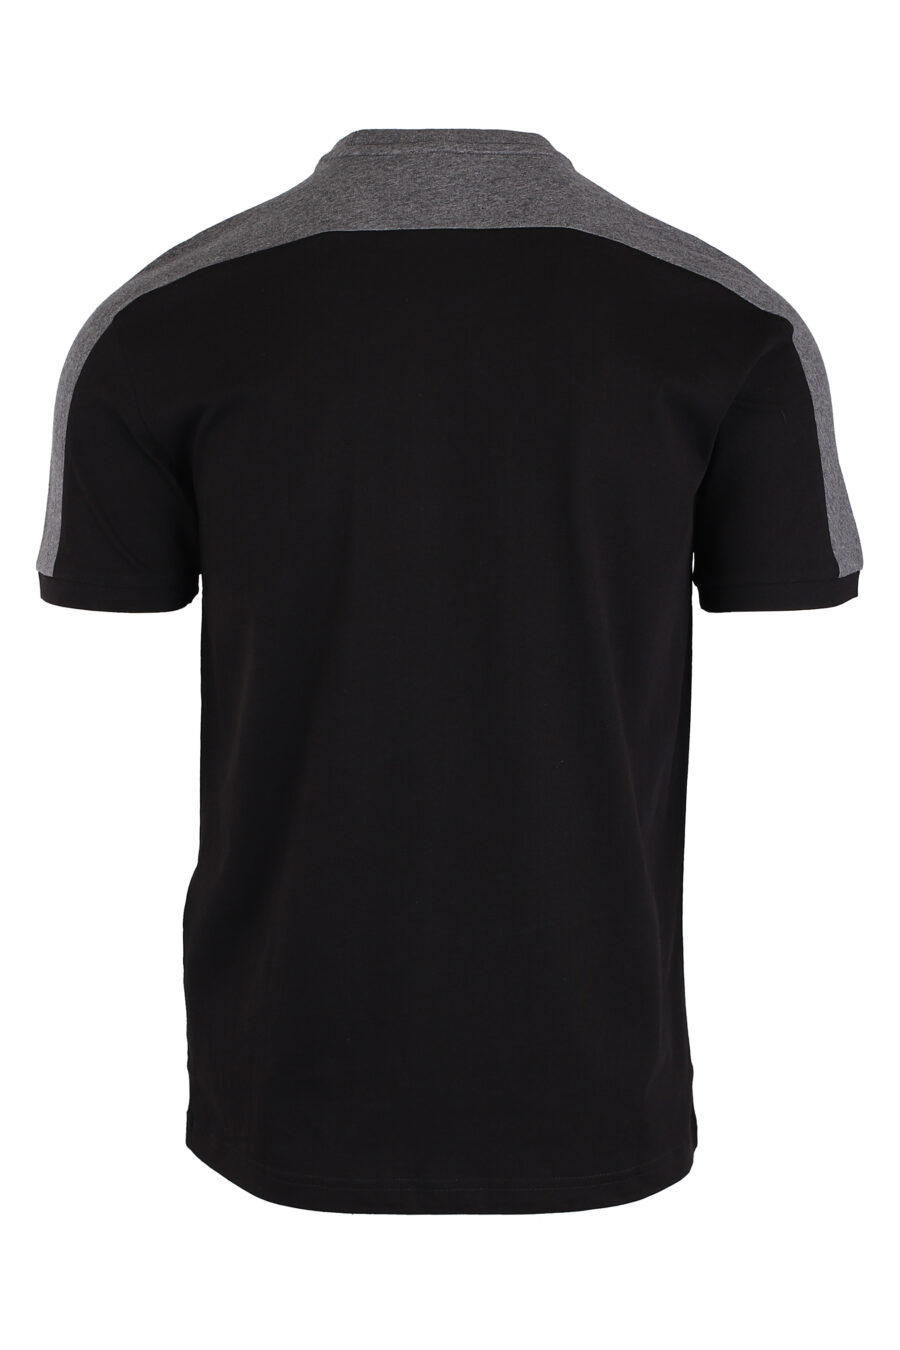 Camiseta negra con gris y logo "lux identity" - IMG 4152